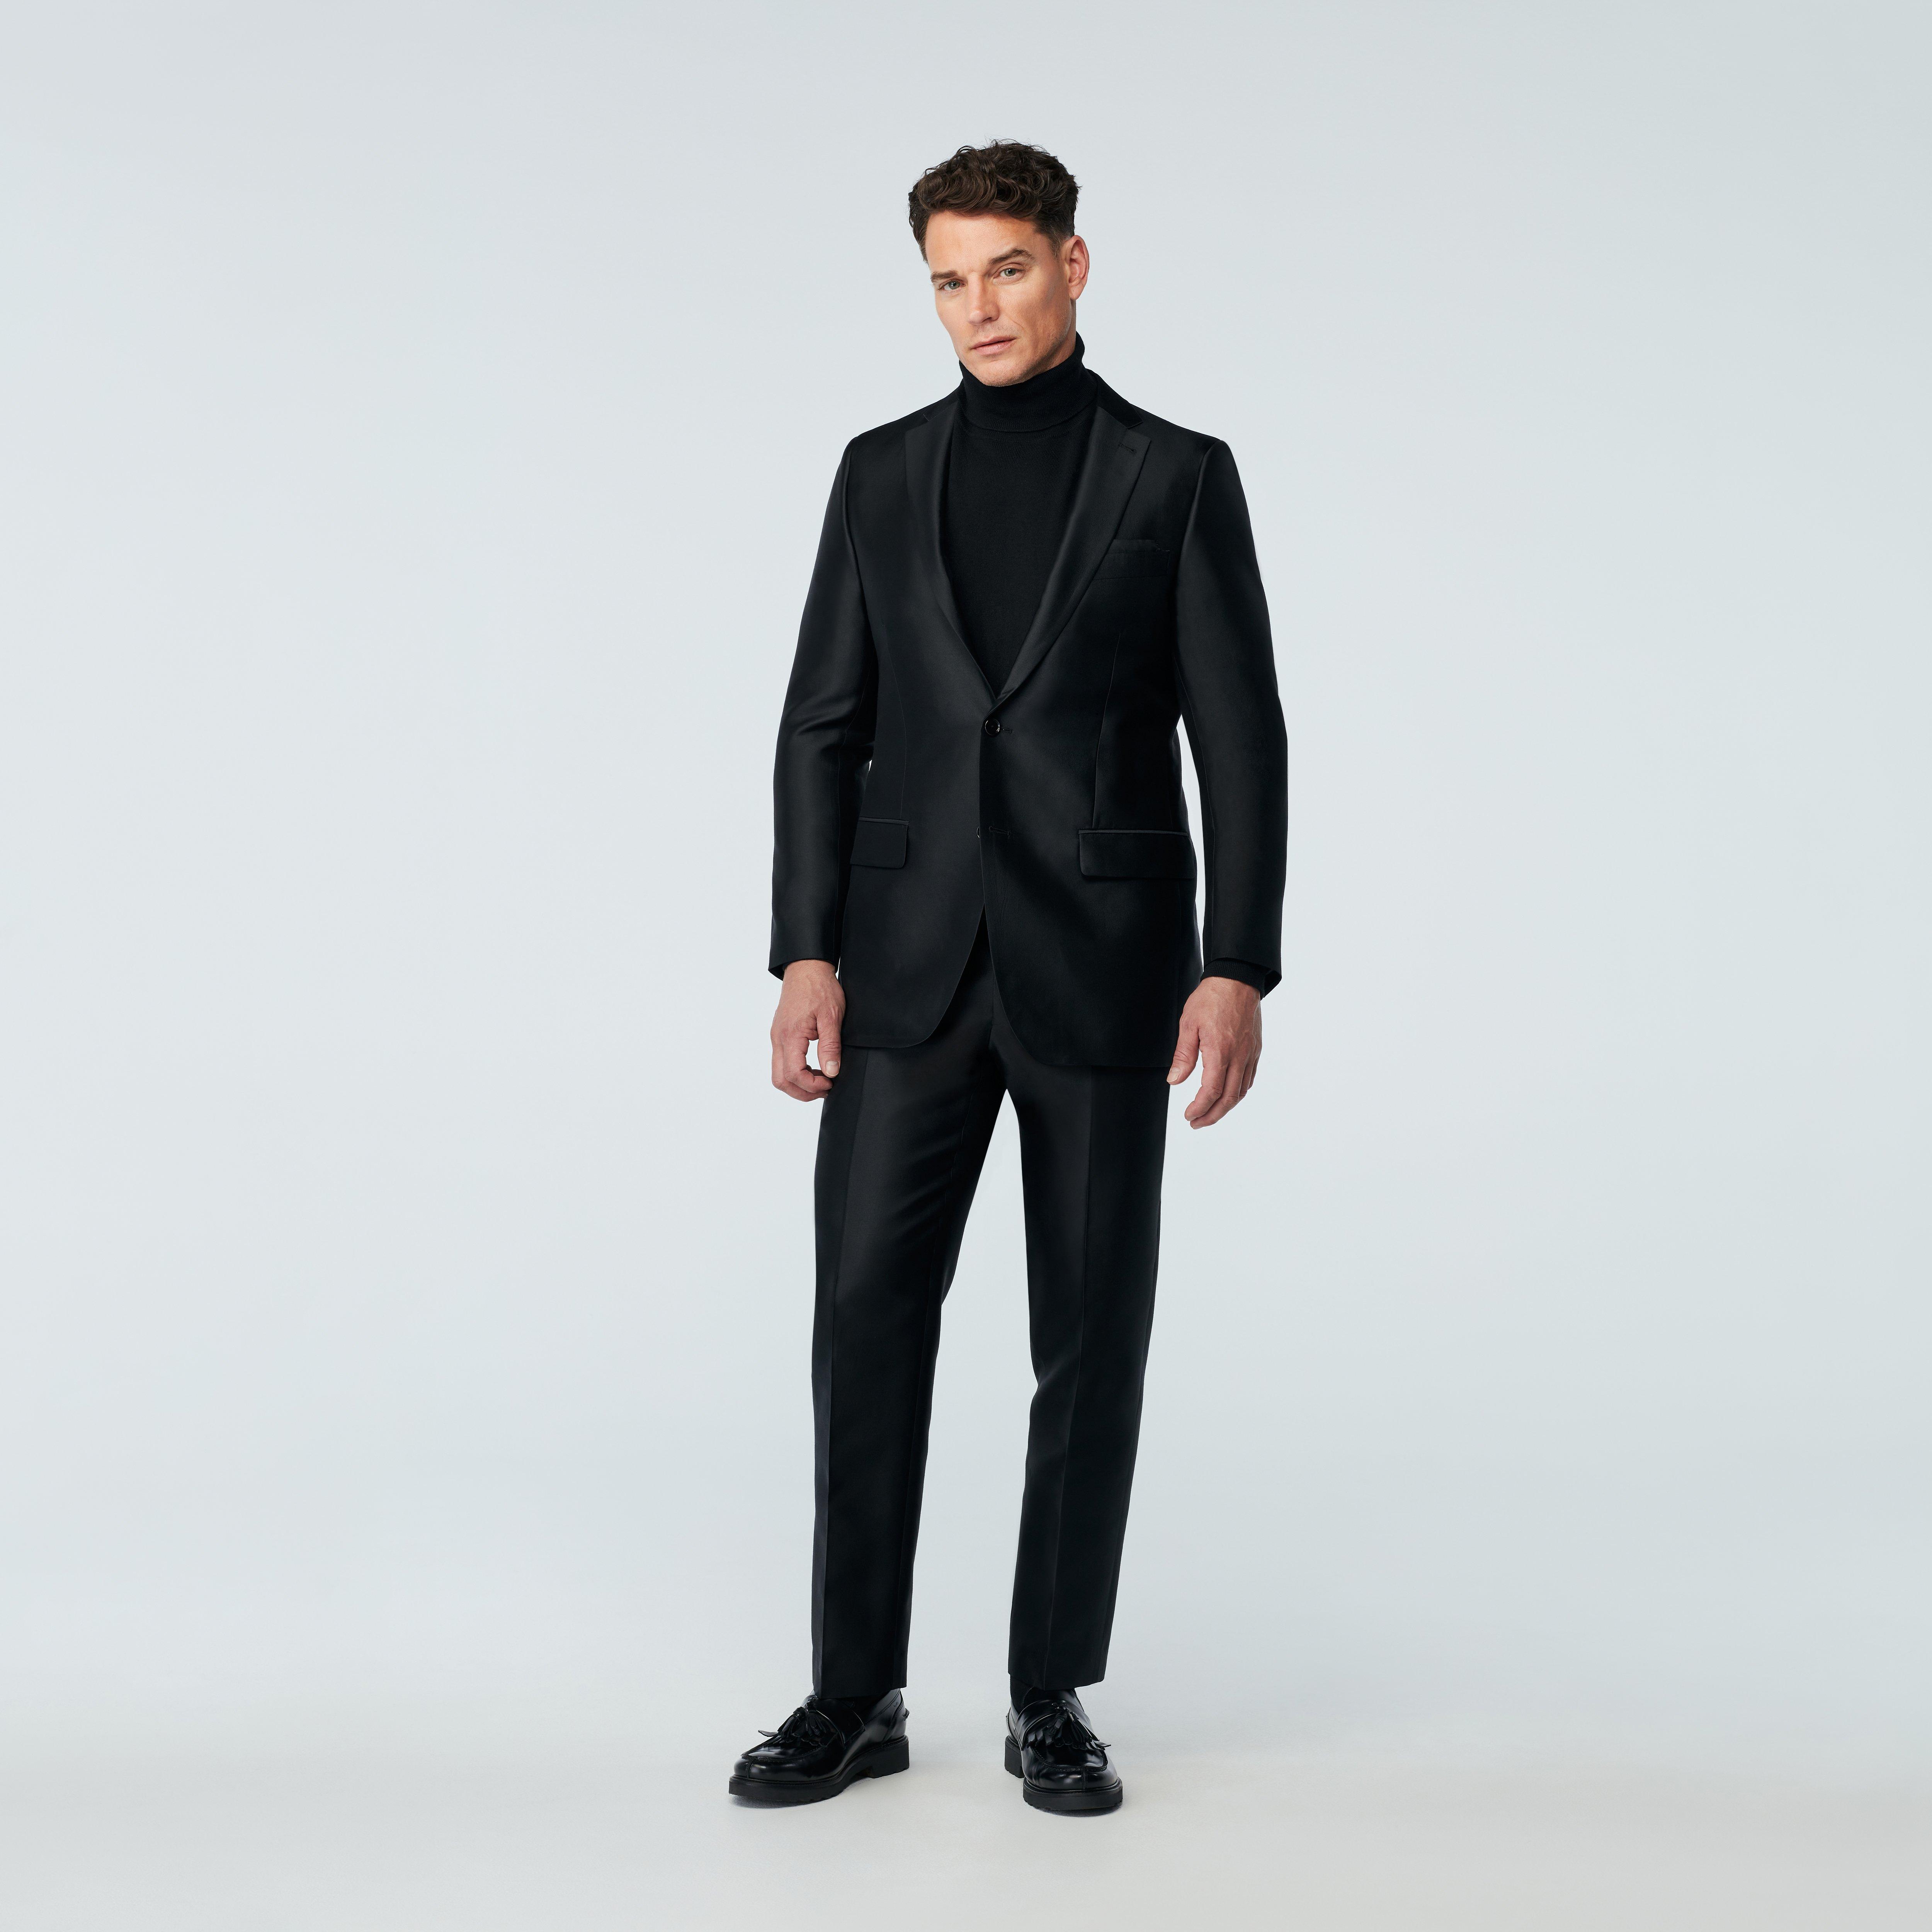 Classic Black Suit Jacket by SuitShop | Birdy Grey